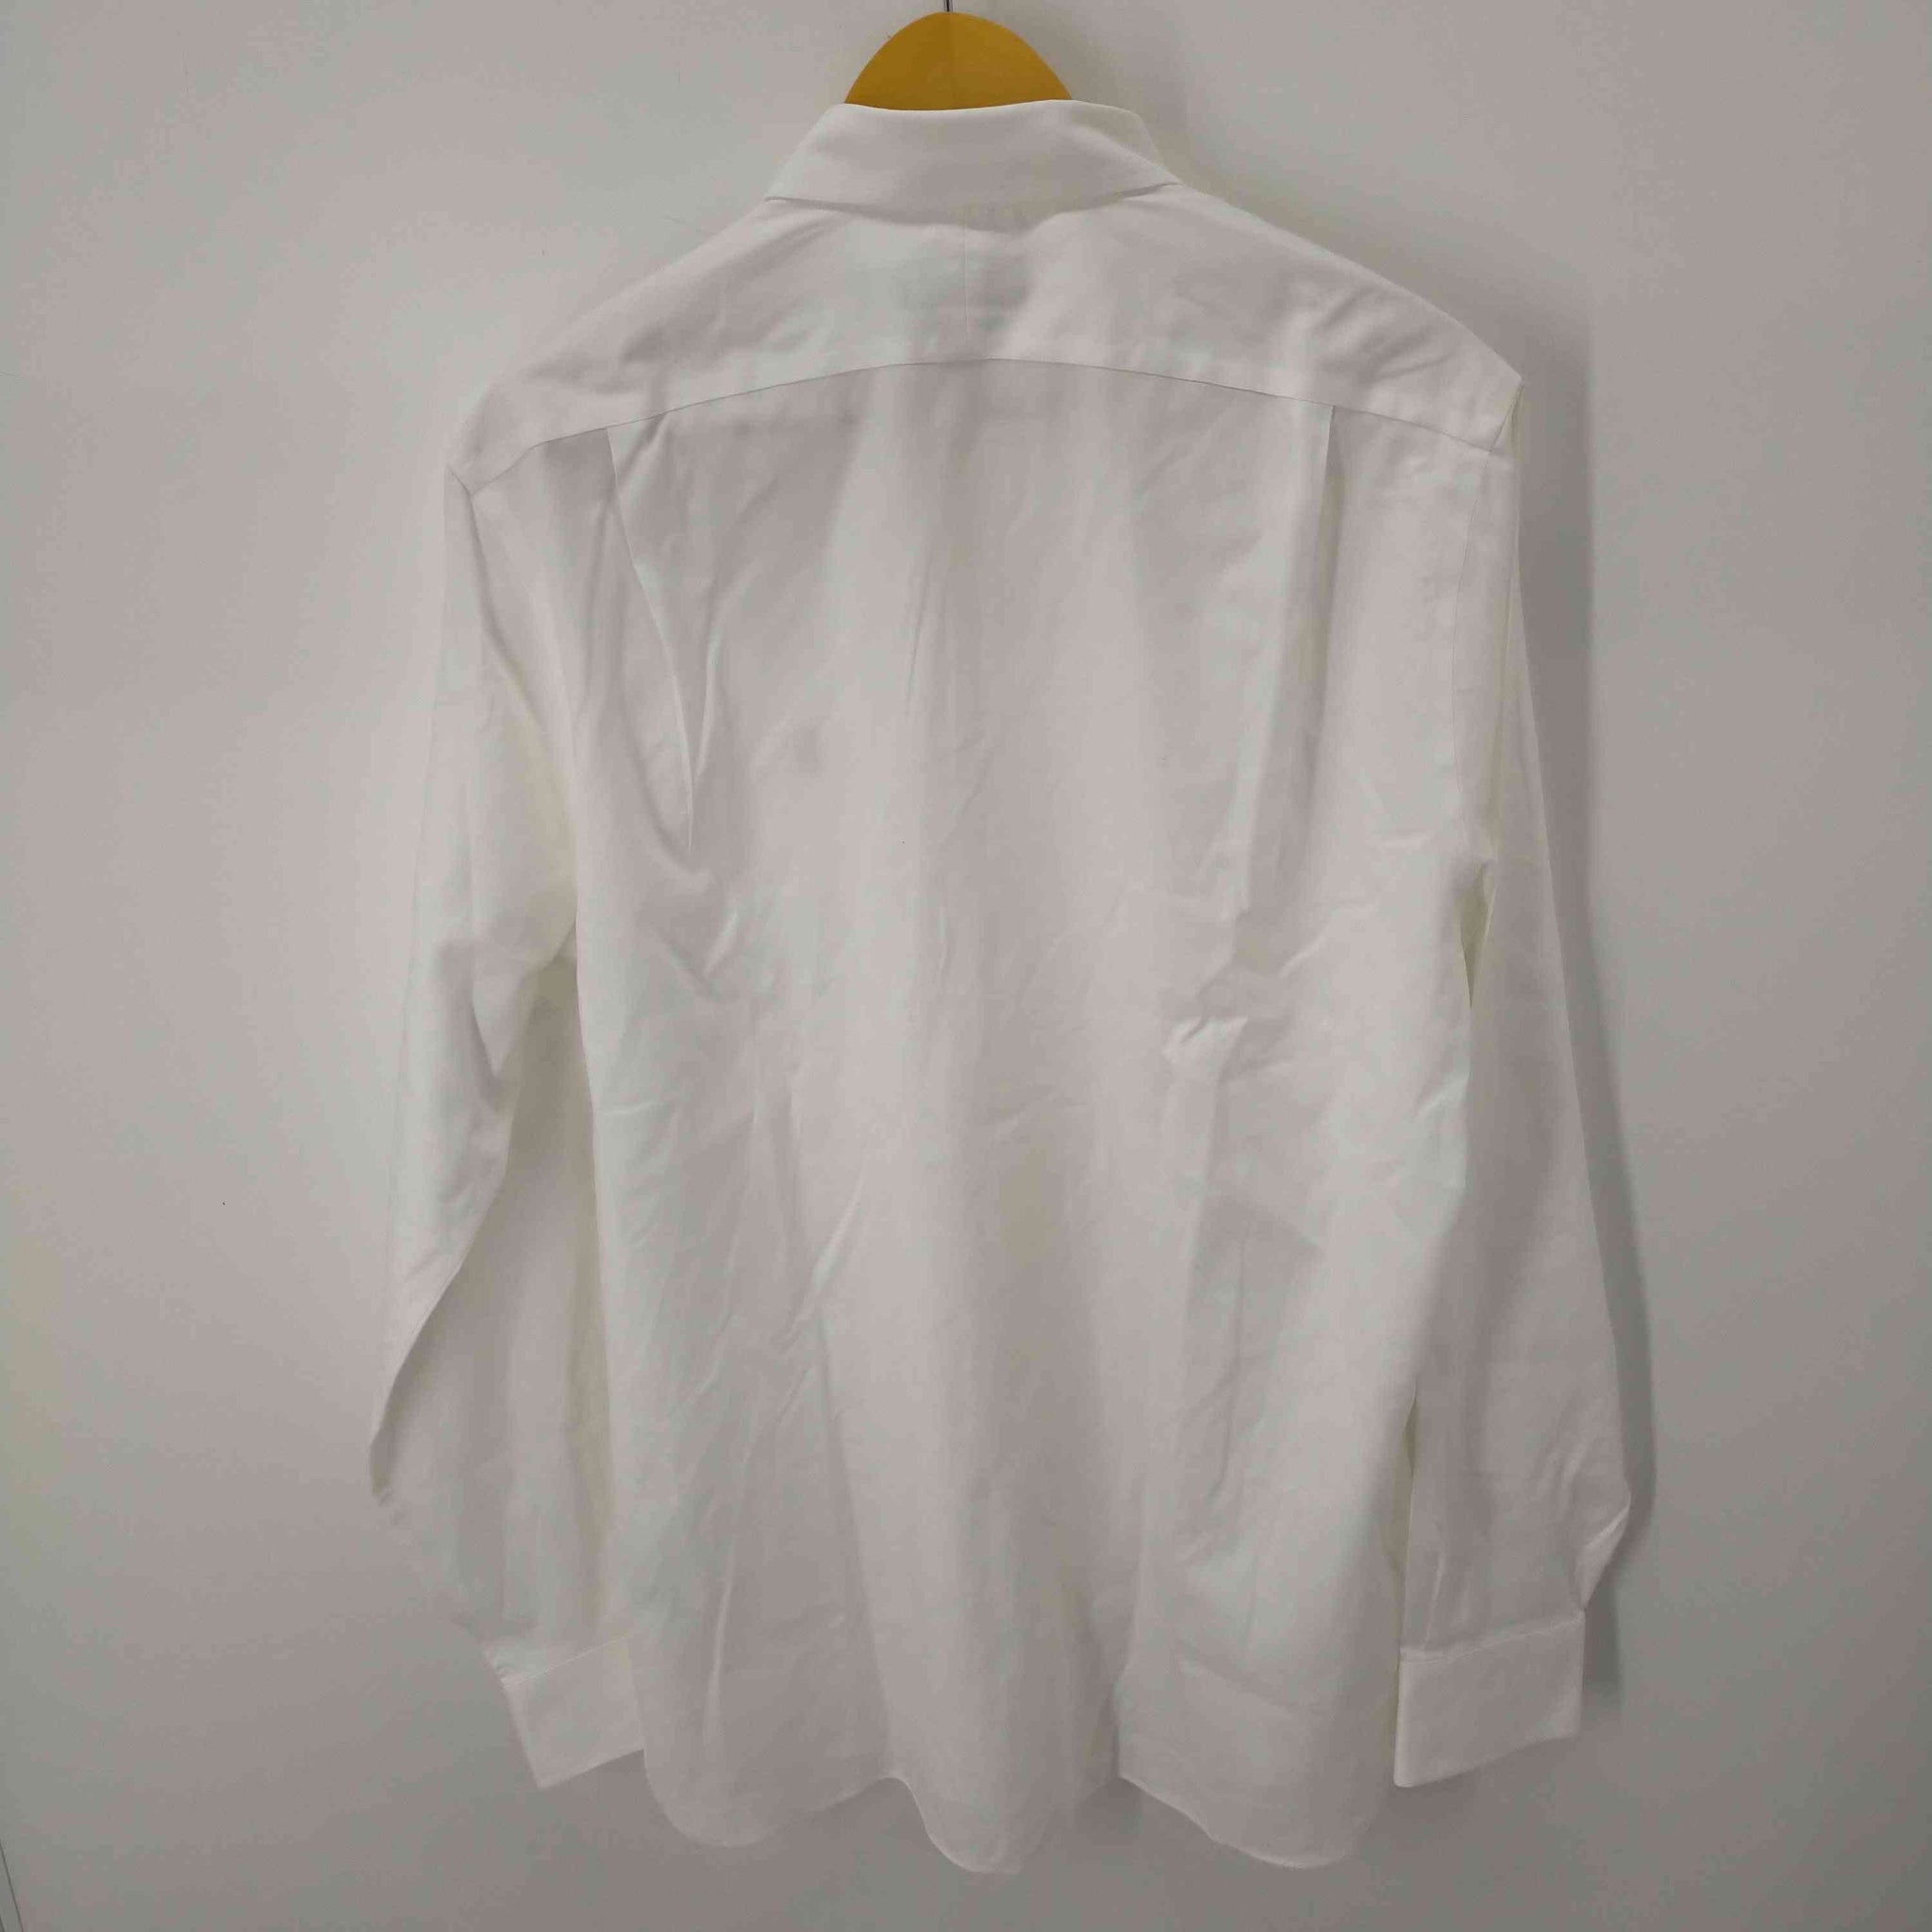 POLO RALPH LAUREN(ポロラルフローレン)CLASSIC FIT EASYCARE スモールポニー刺繍 L/Sシャツ